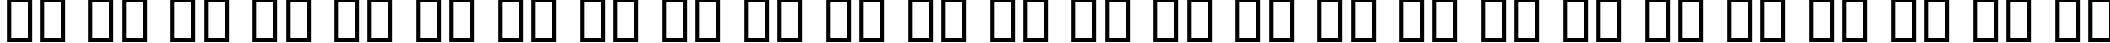 Пример написания английского алфавита шрифтом B Narenj